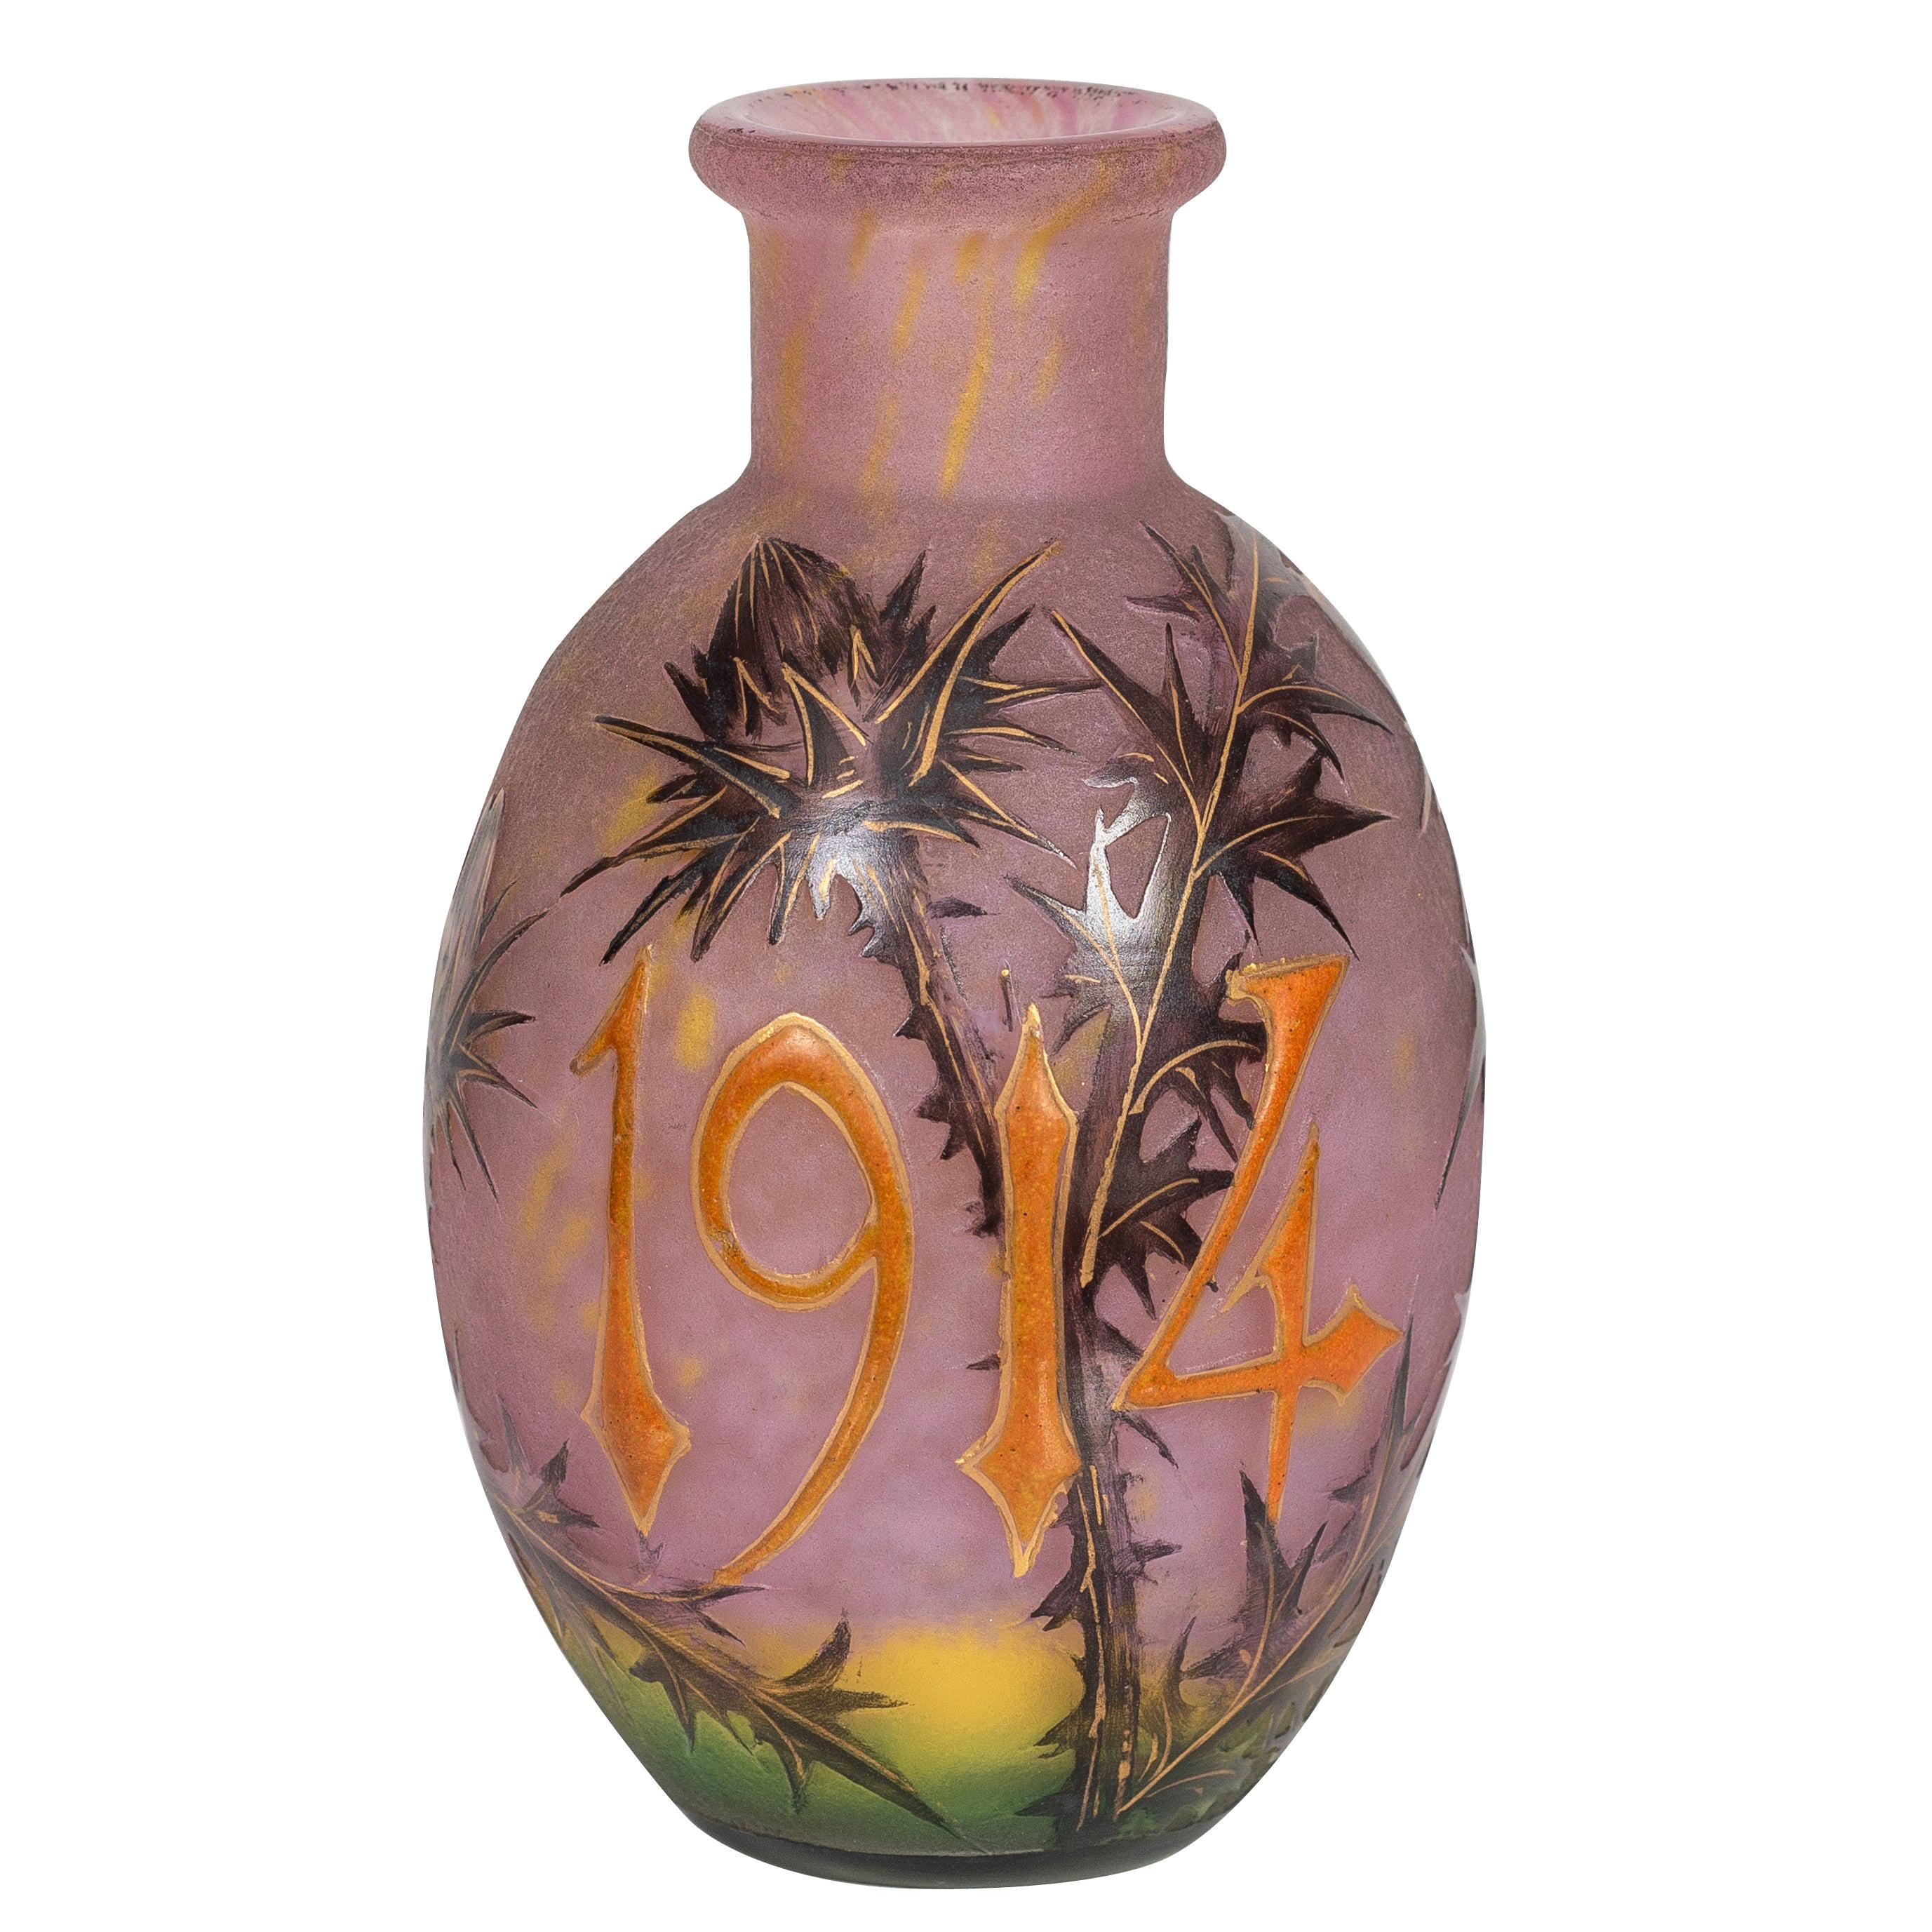 Daum Nancy Enameled and Internally Decorated Glass Vase, "1914"